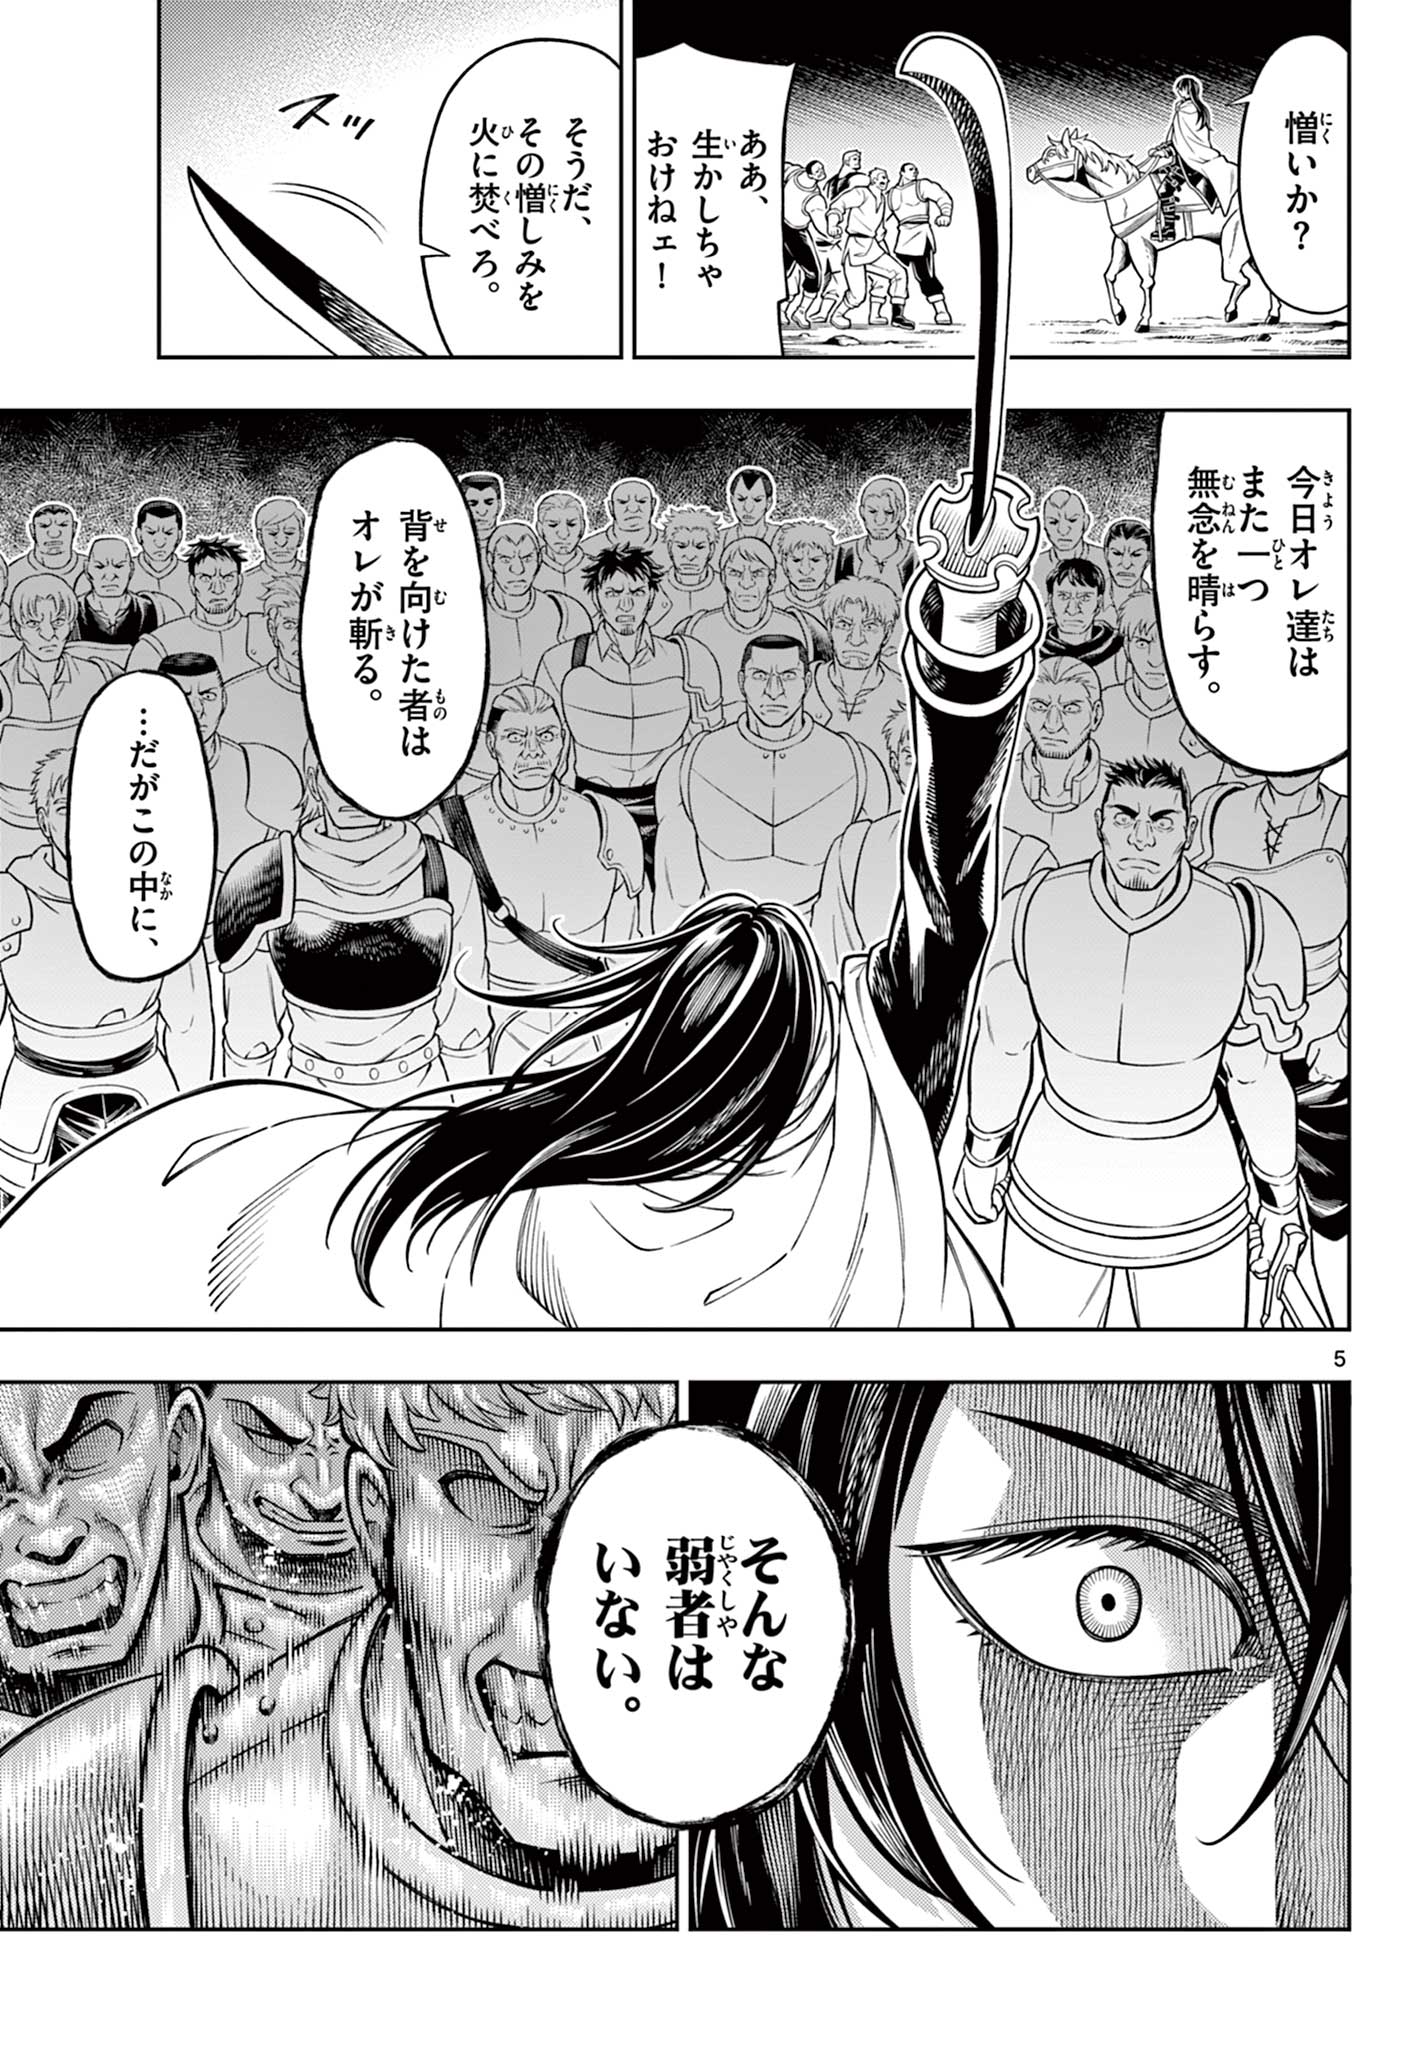 Soara to Mamono no ie - Chapter 28 - Page 5